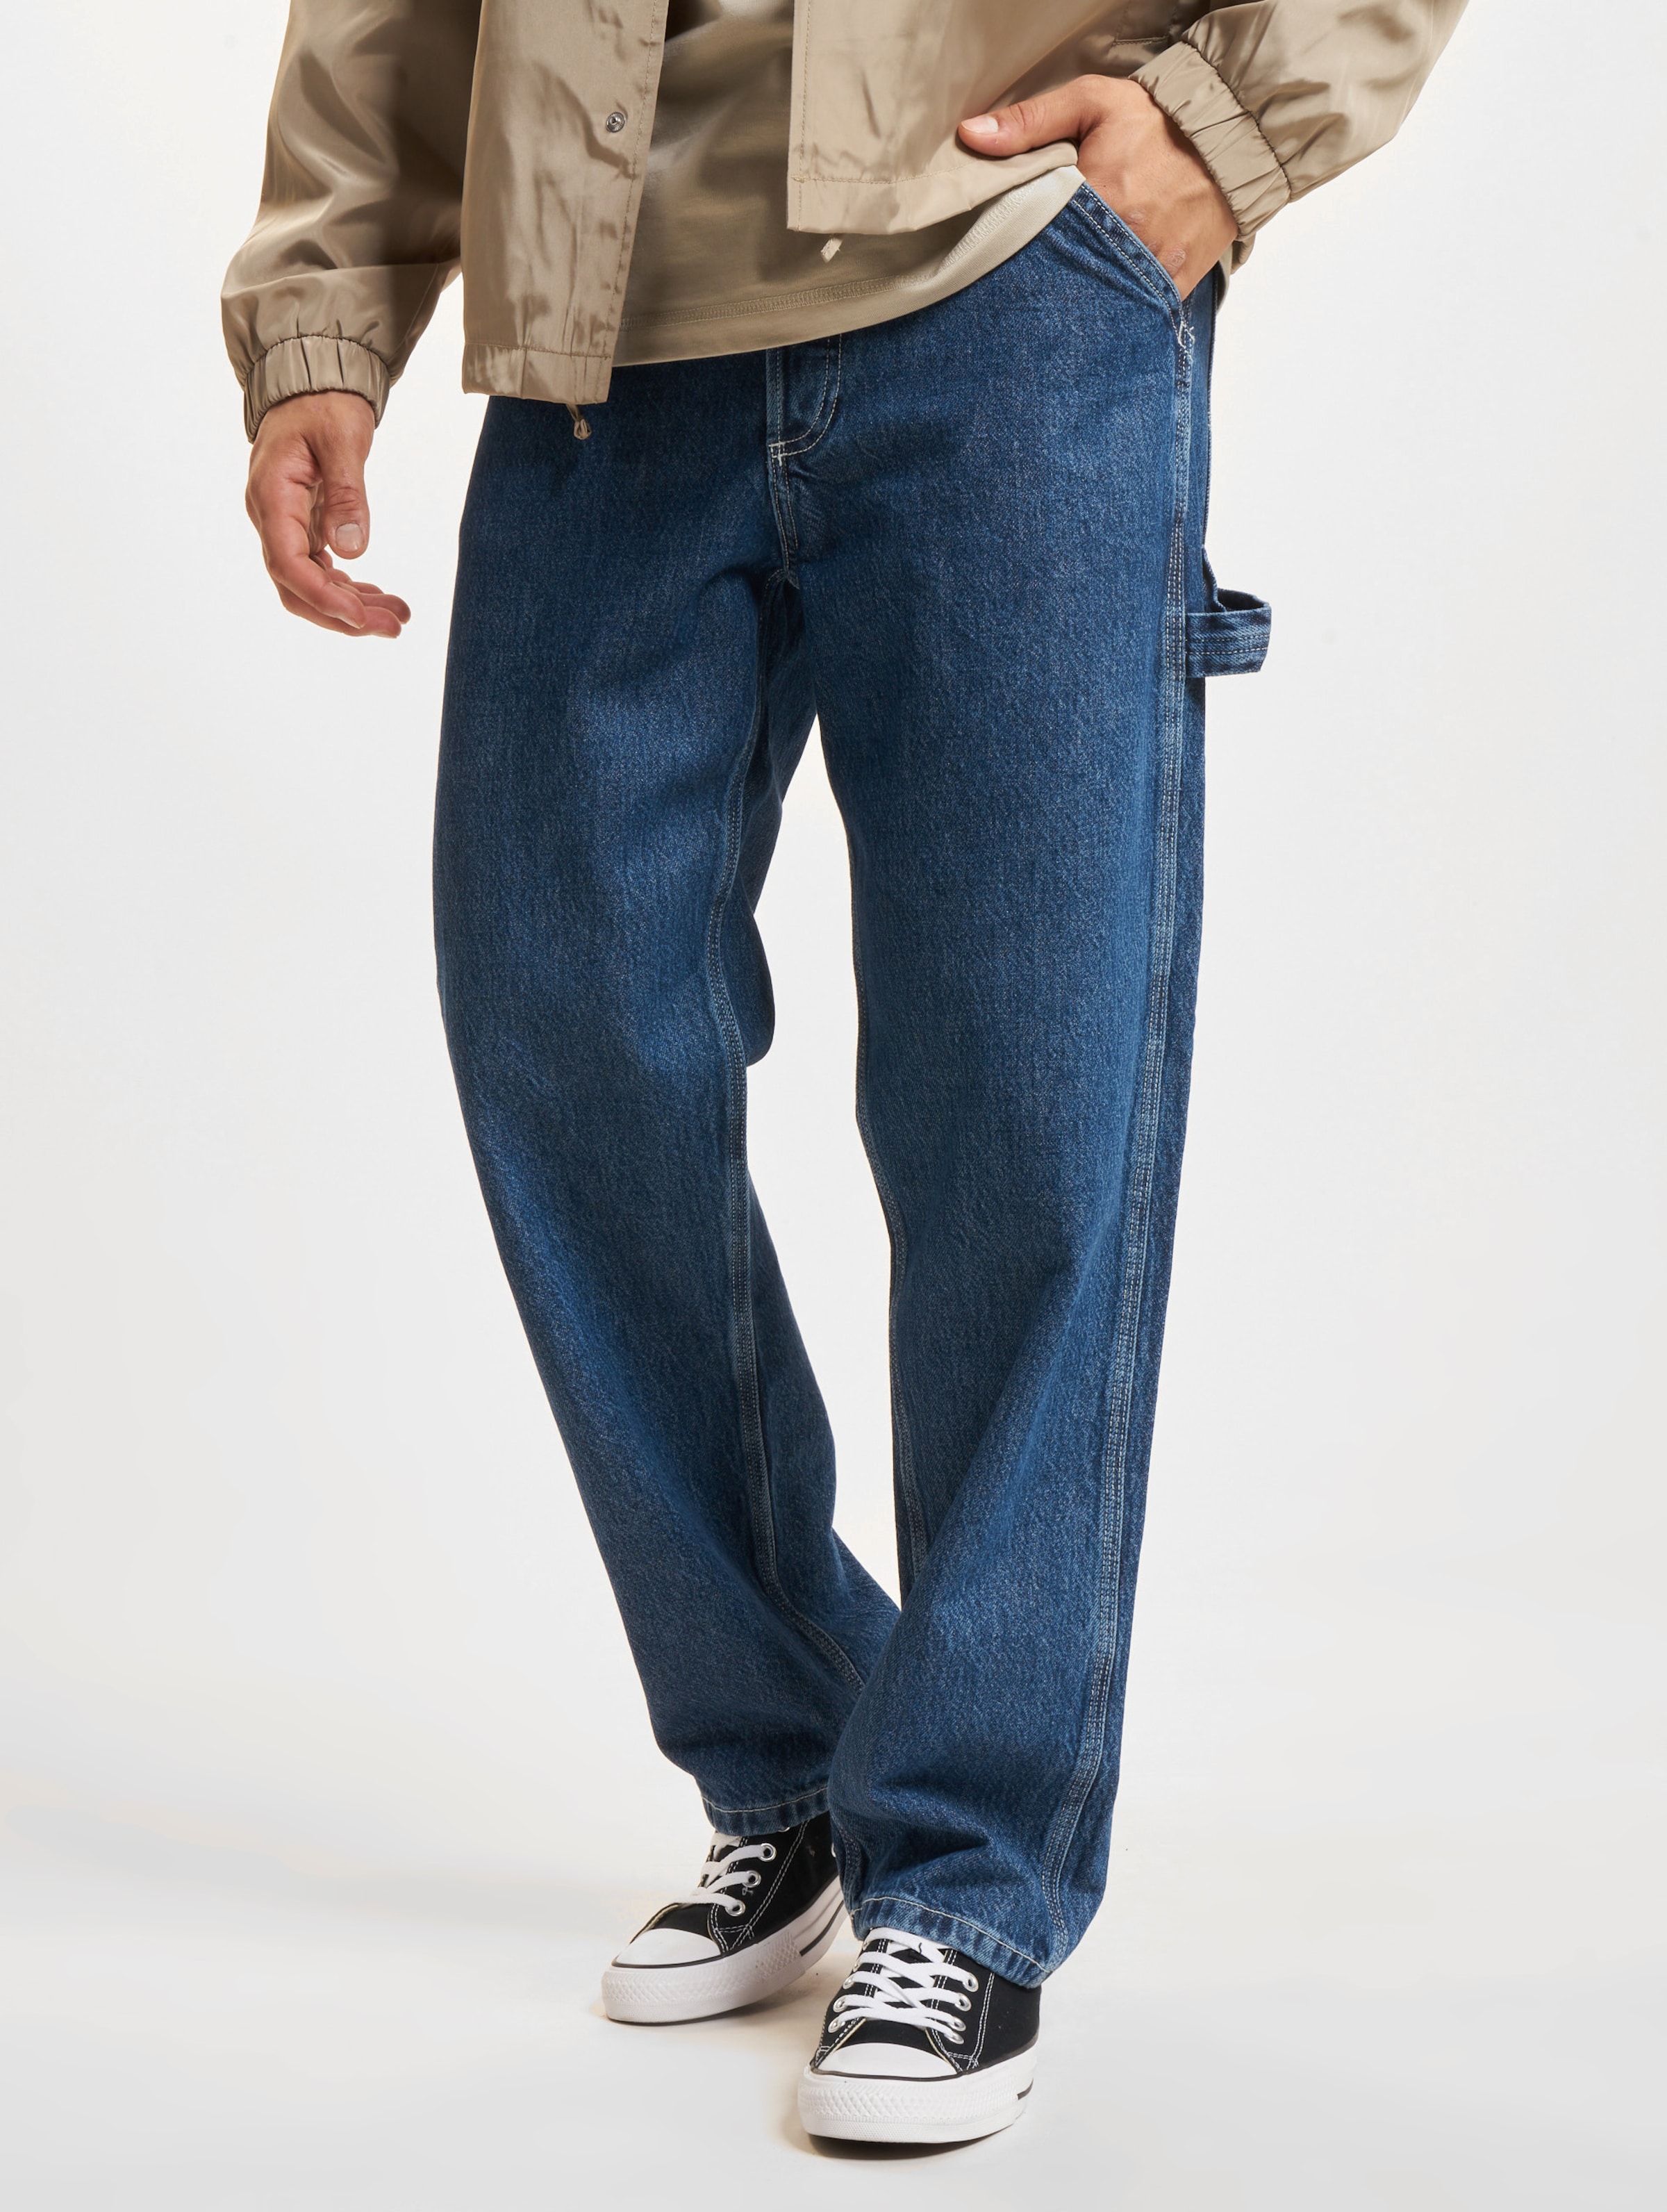 Jack & Jones Eddie Carpenter SBD 316 Loose Fit Jeans Mannen op kleur blauw, Maat 3432